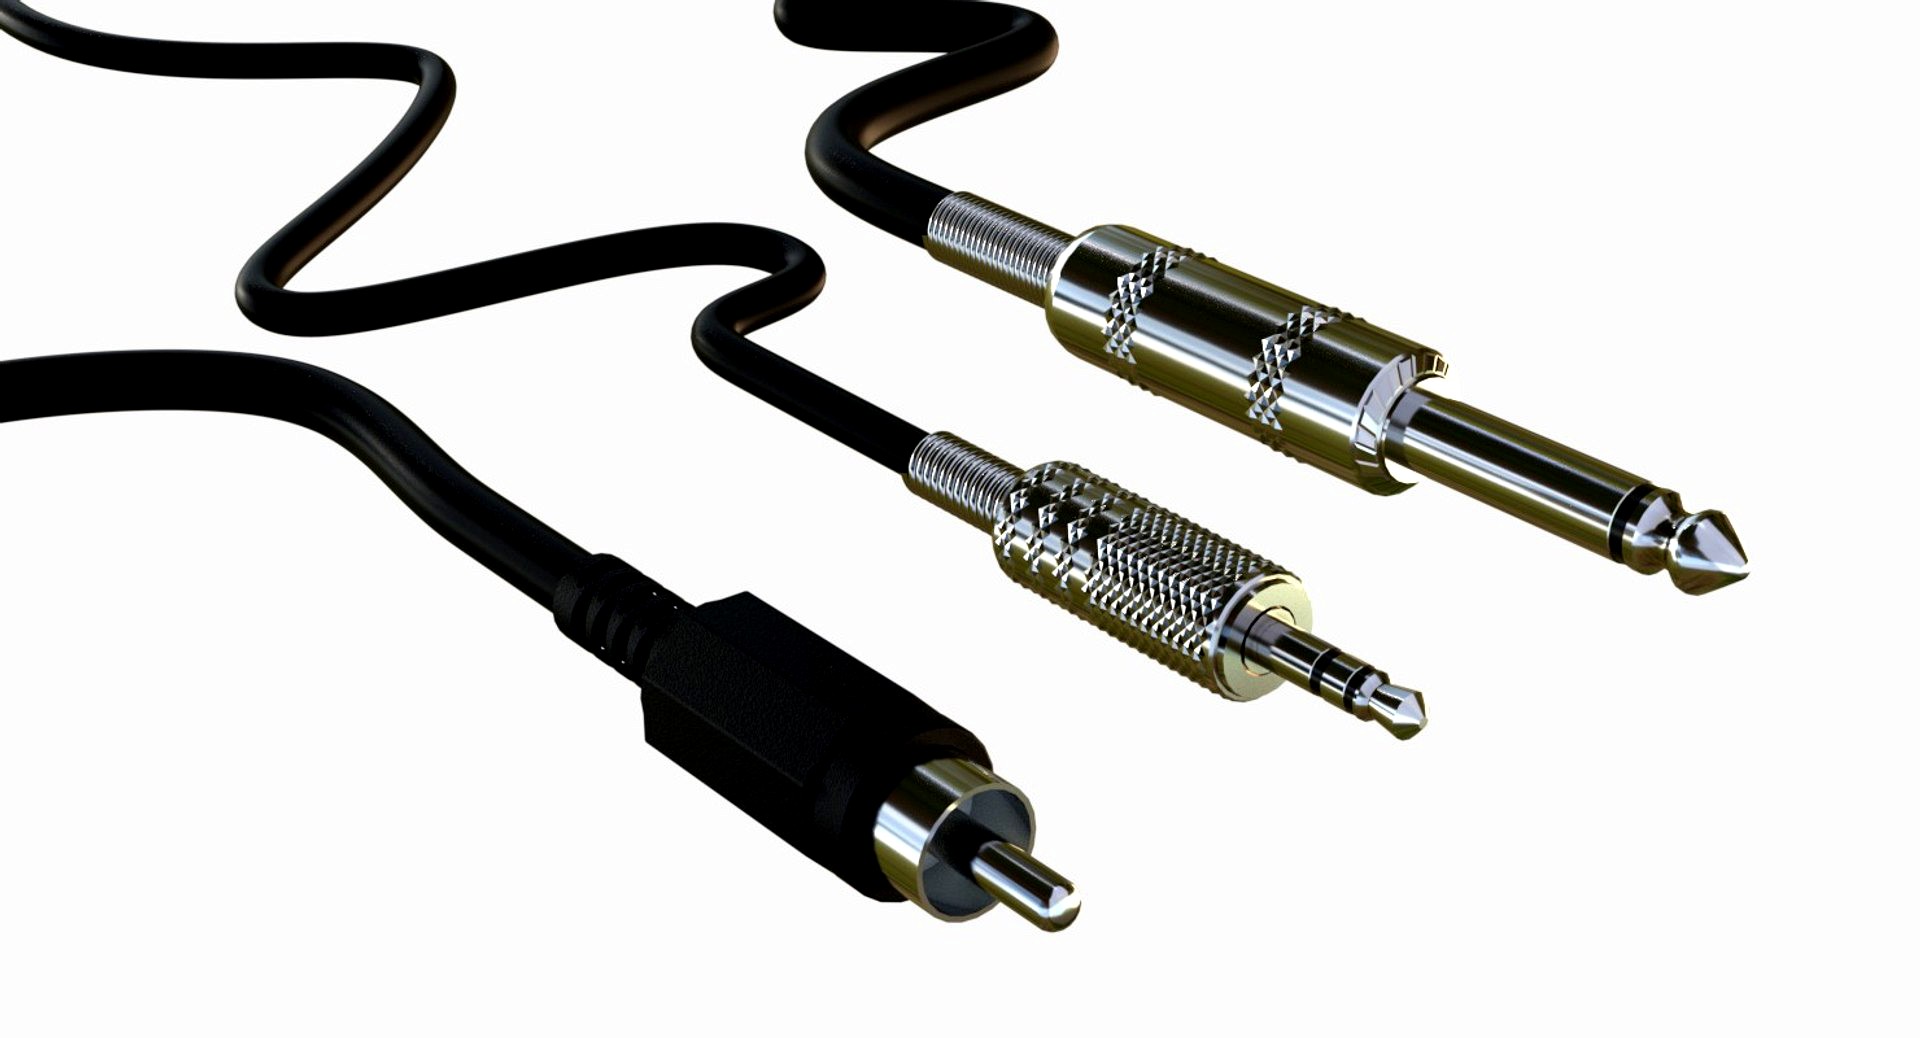 Audio connectors